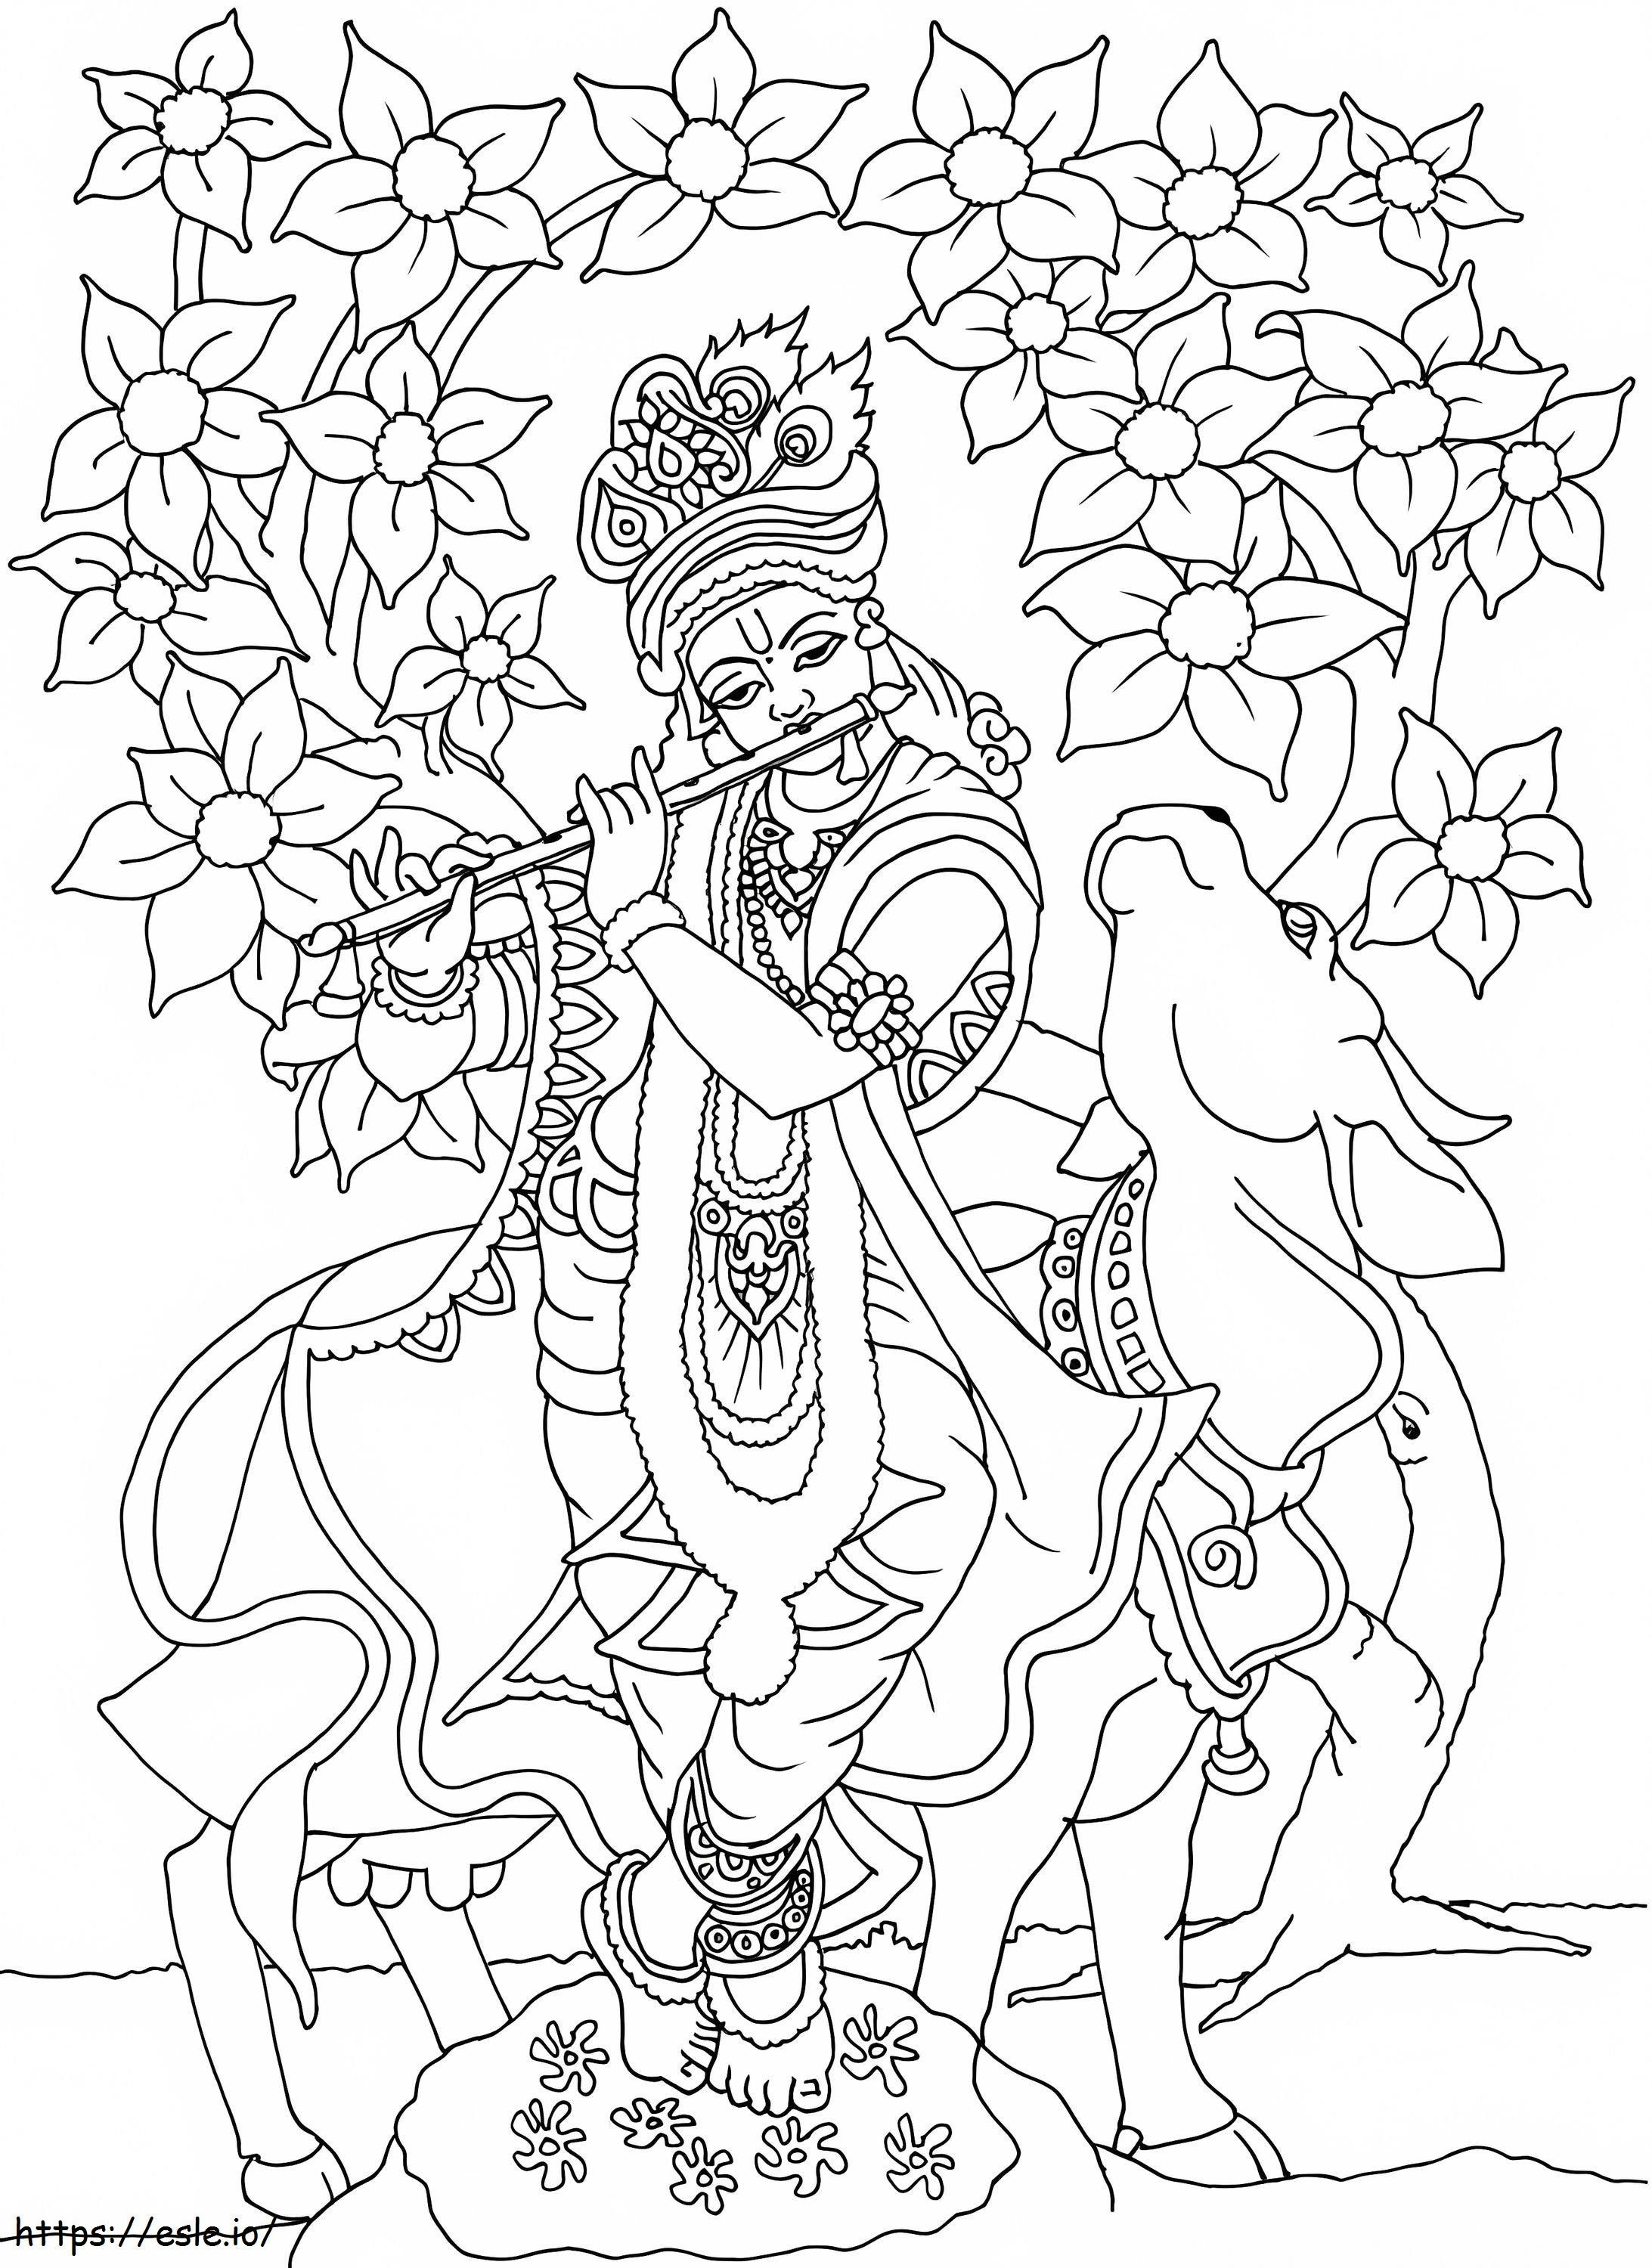 Krishna 1 coloring page